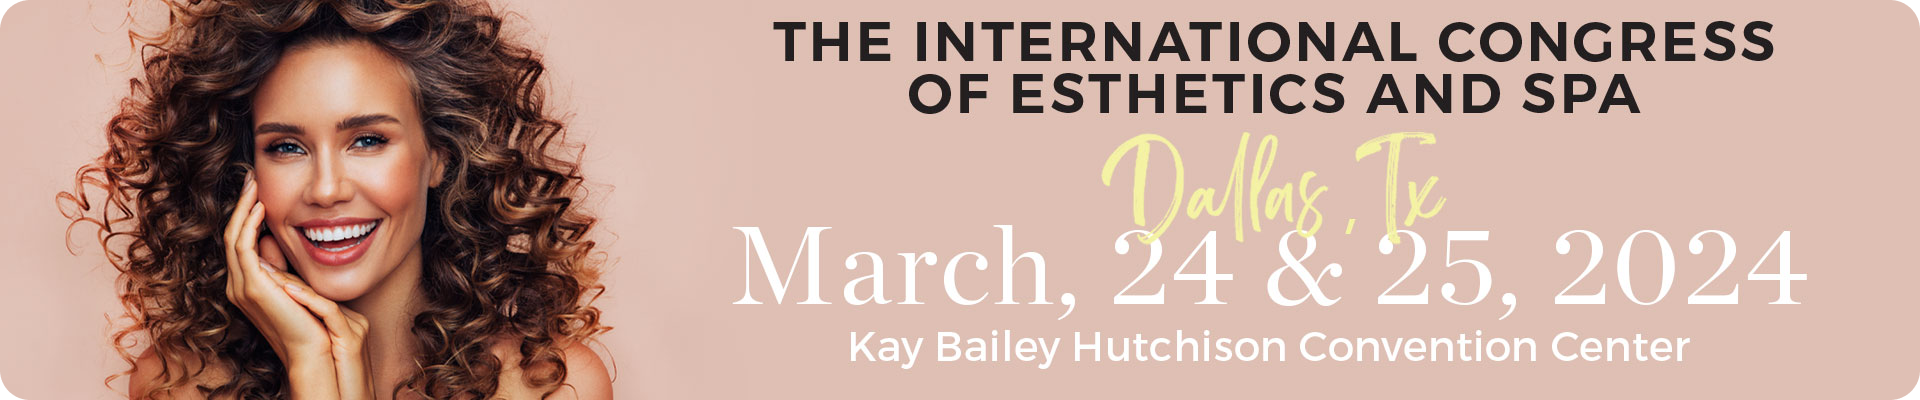 The International Congress of Esthetics and Spa